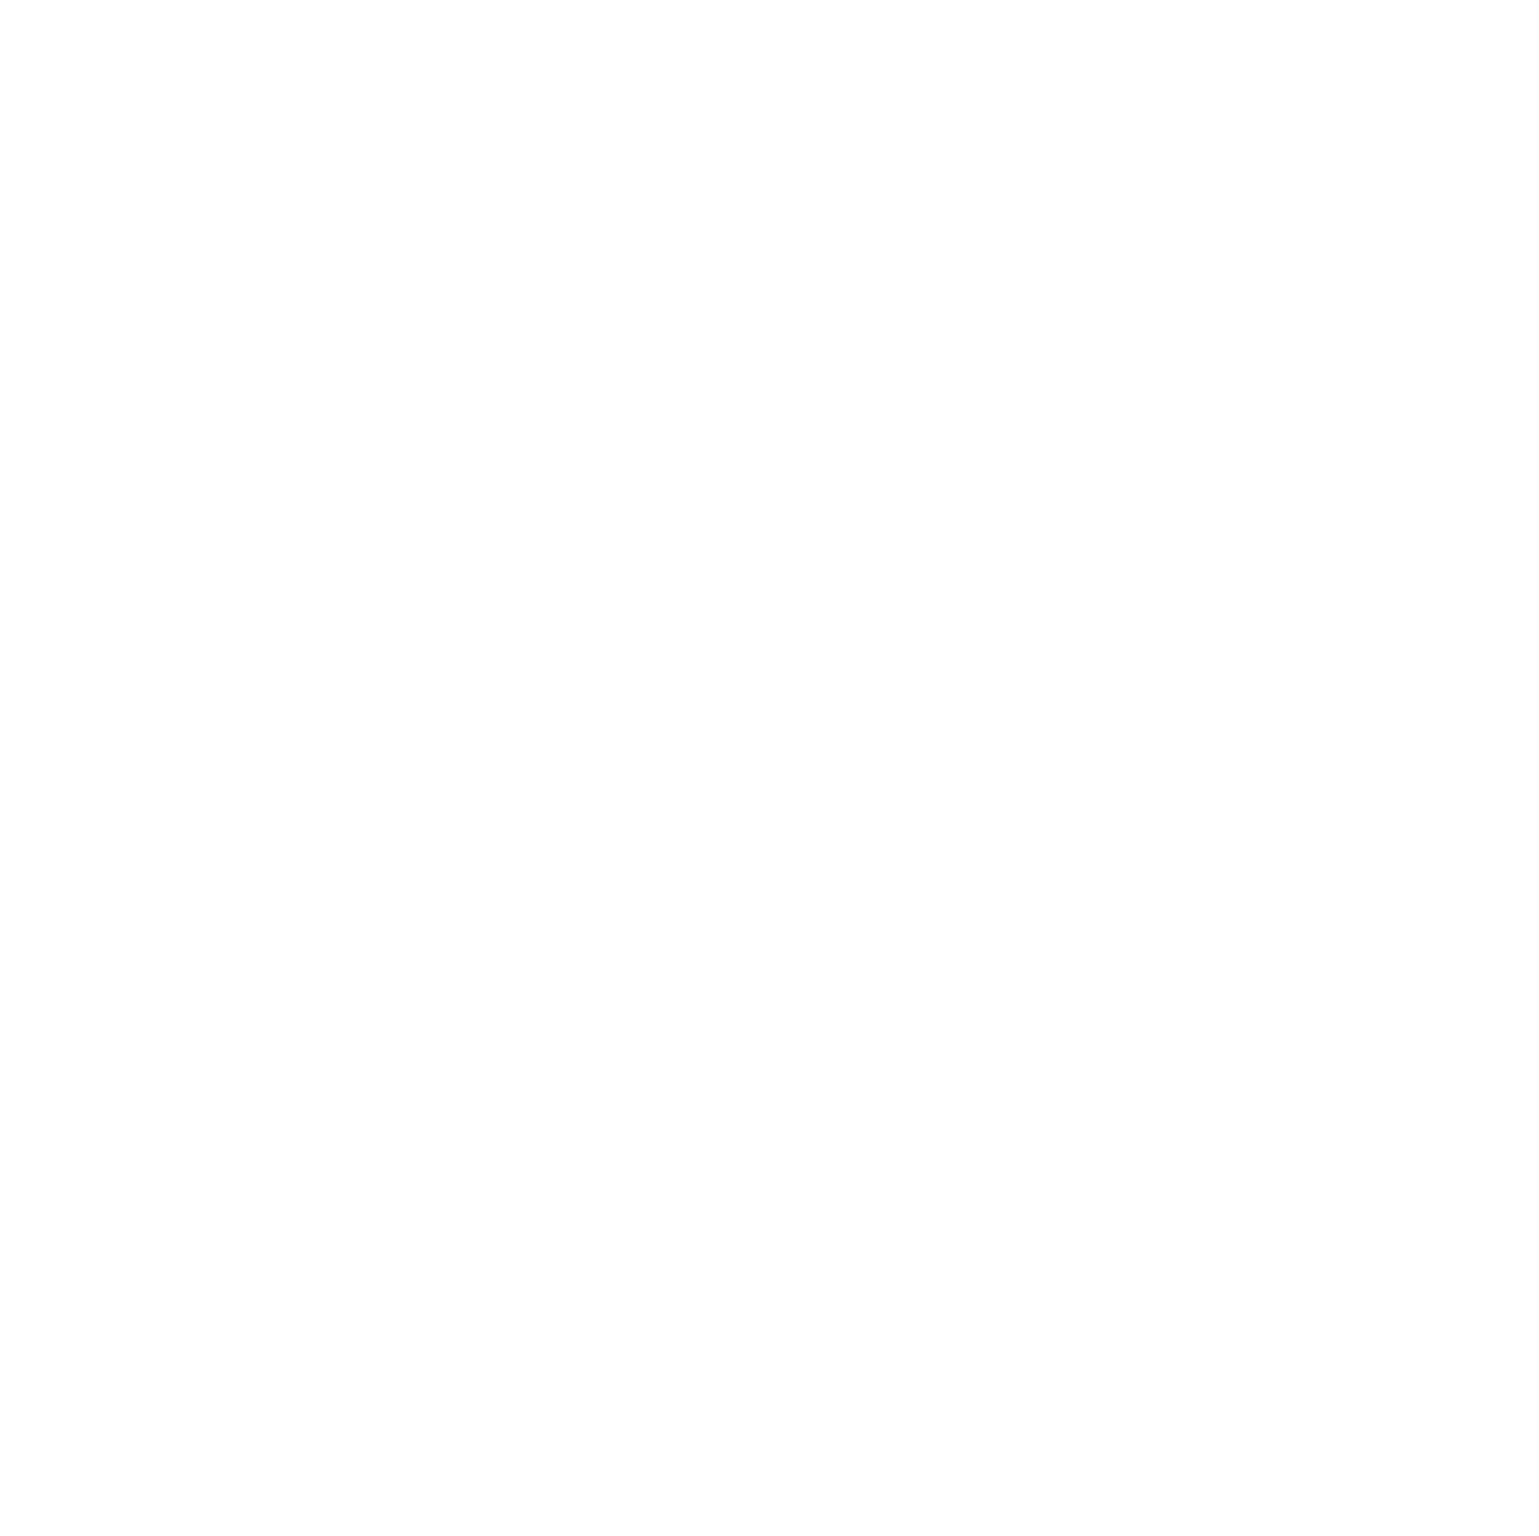 L&T Technology Services logo for dark backgrounds (transparent PNG)